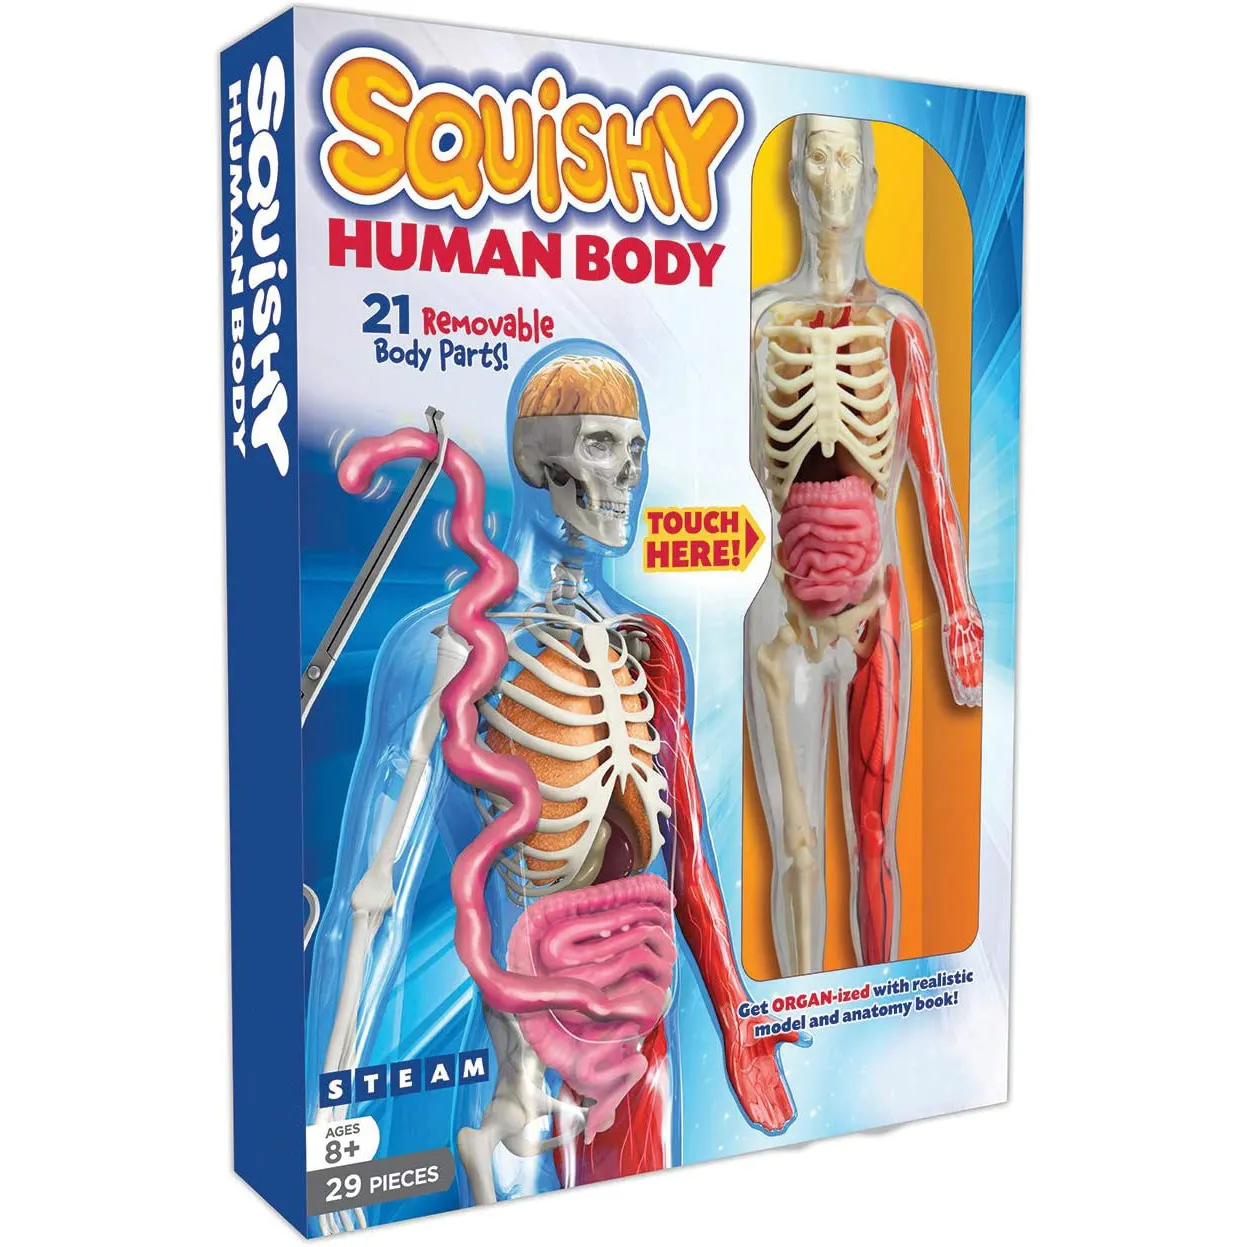 Human body organ assemble jigsaw skeleton anatomy model for teaching study tools toys children learning medical anatomy kits